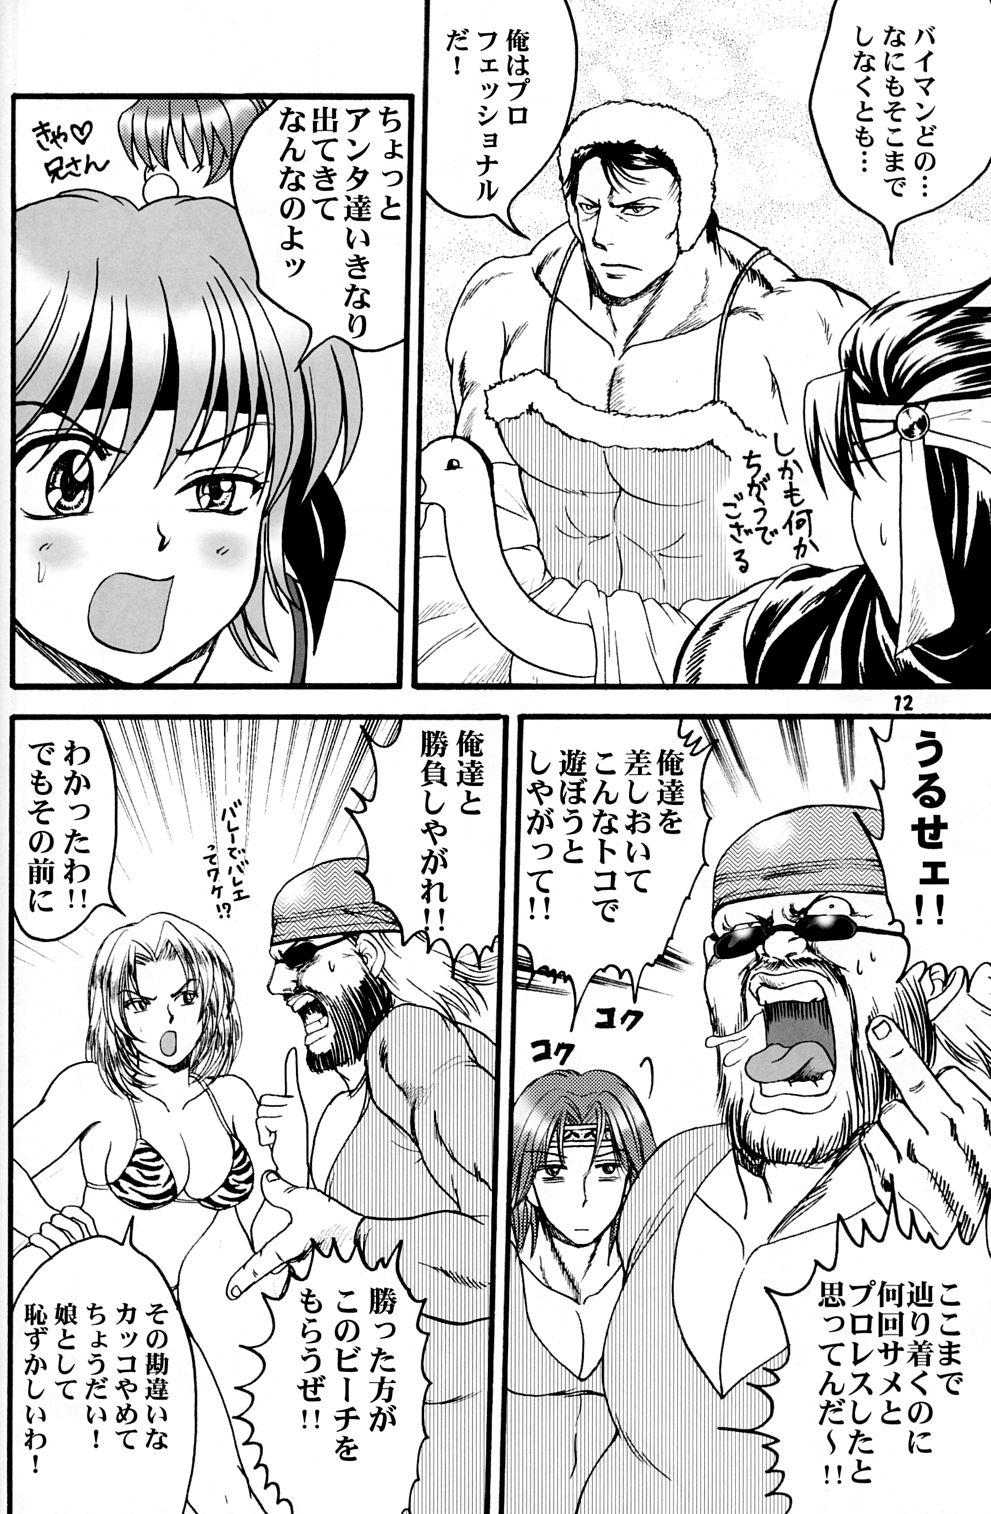 Celebrities Gokujou desu yo! - It's XTREME! - Dead or alive Close Up - Page 11